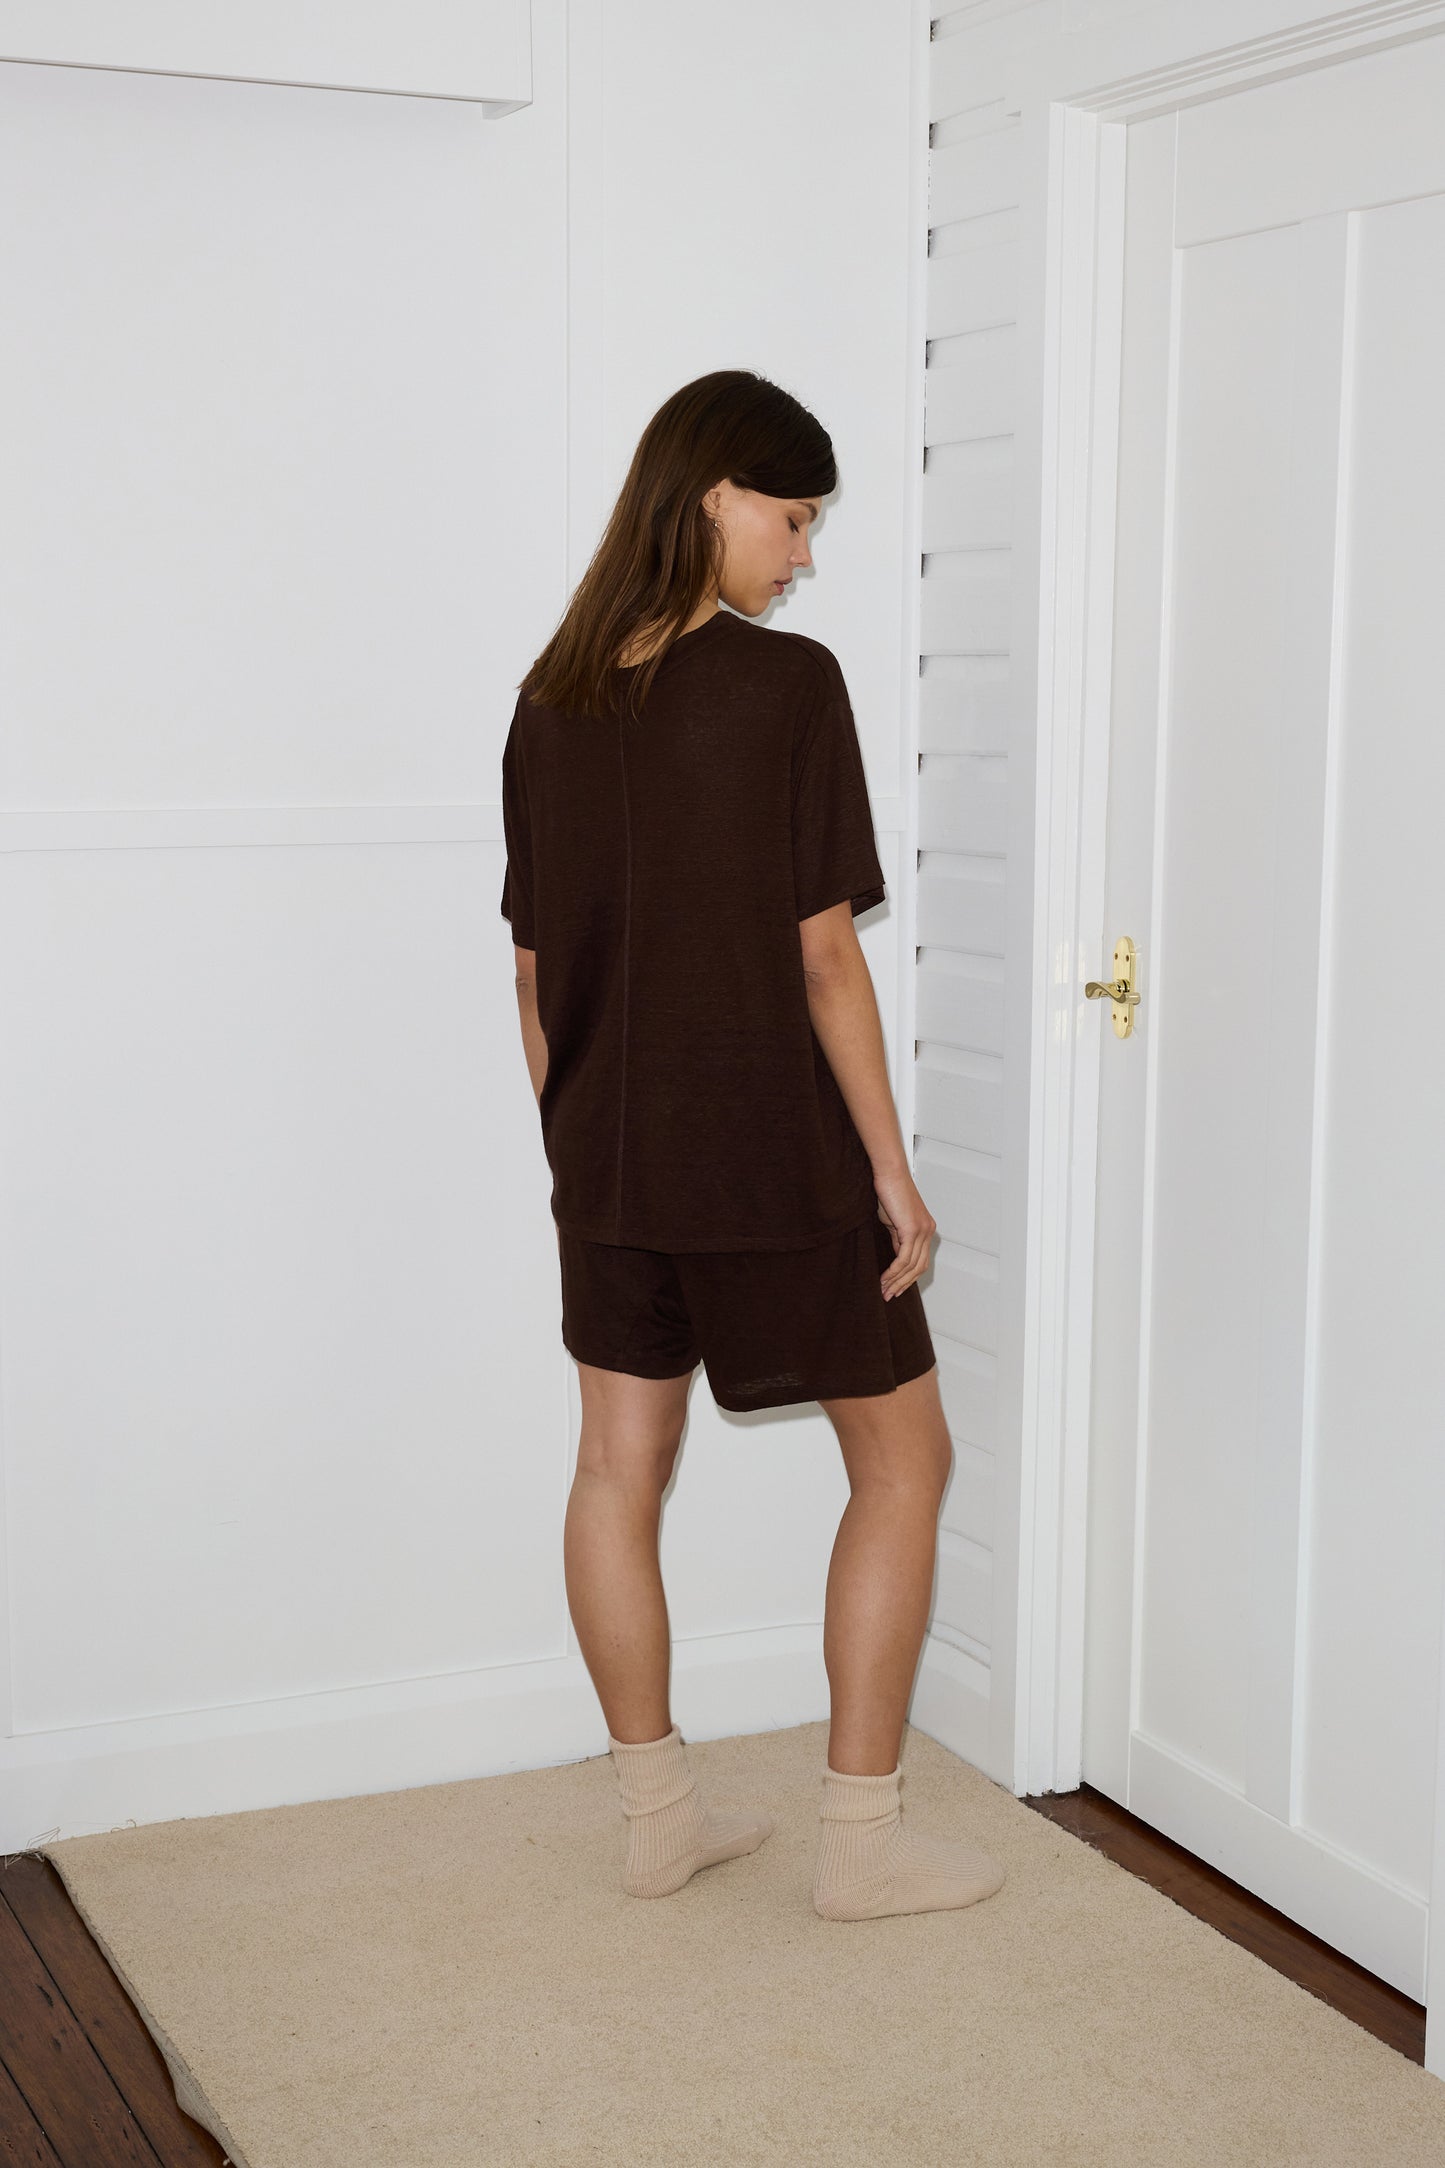 Female model wearing soft t shirt - chocolate by Deiji Studios against plain background